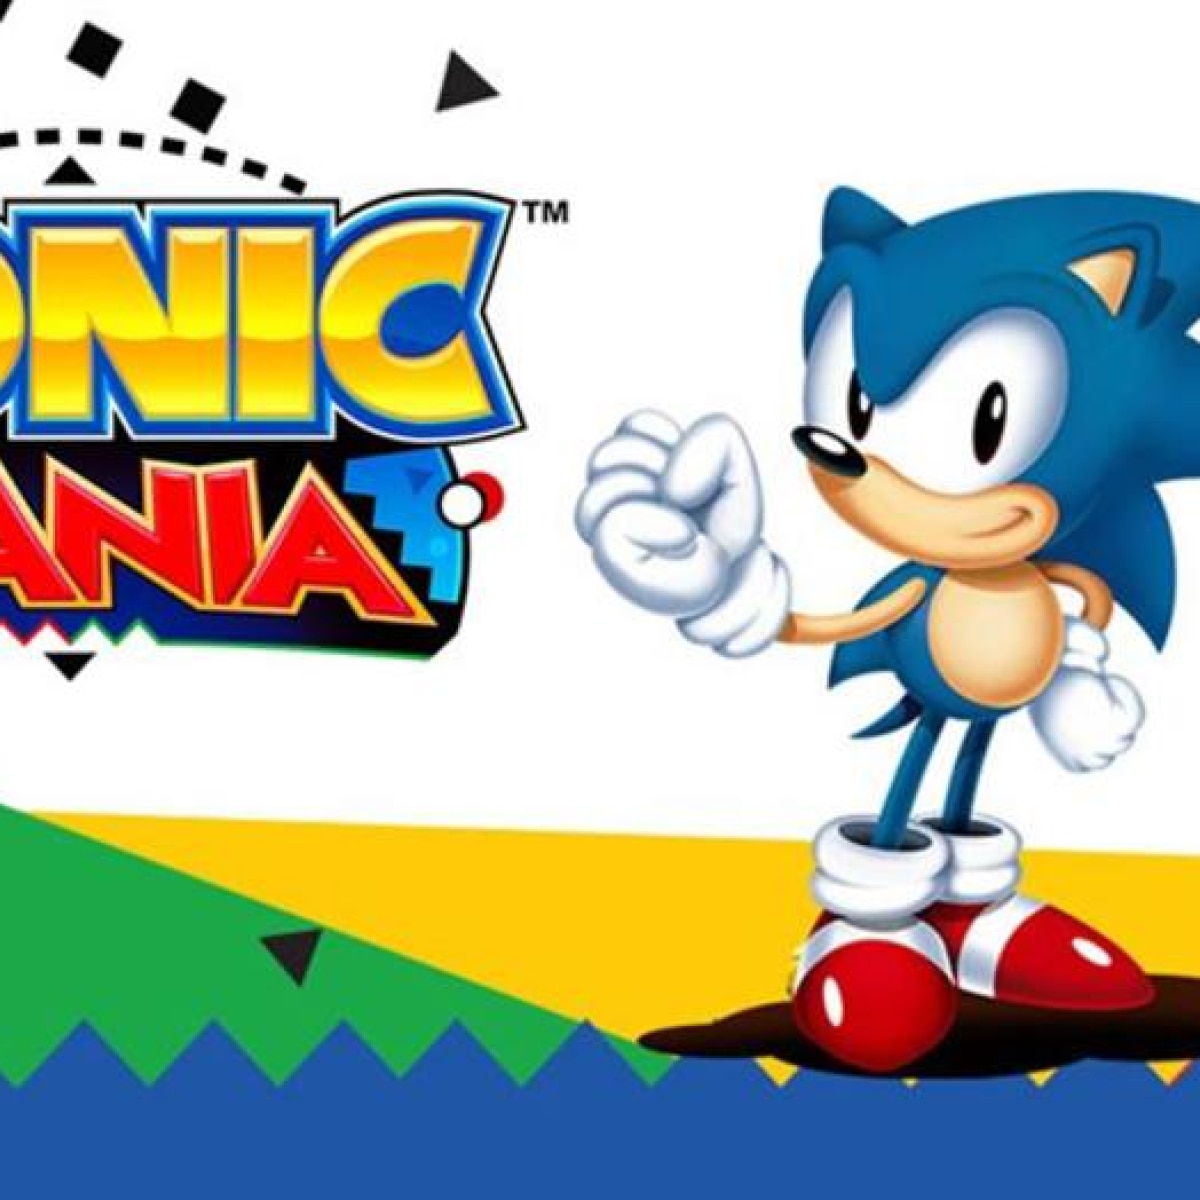 Novo Sonic Mania Pra Android